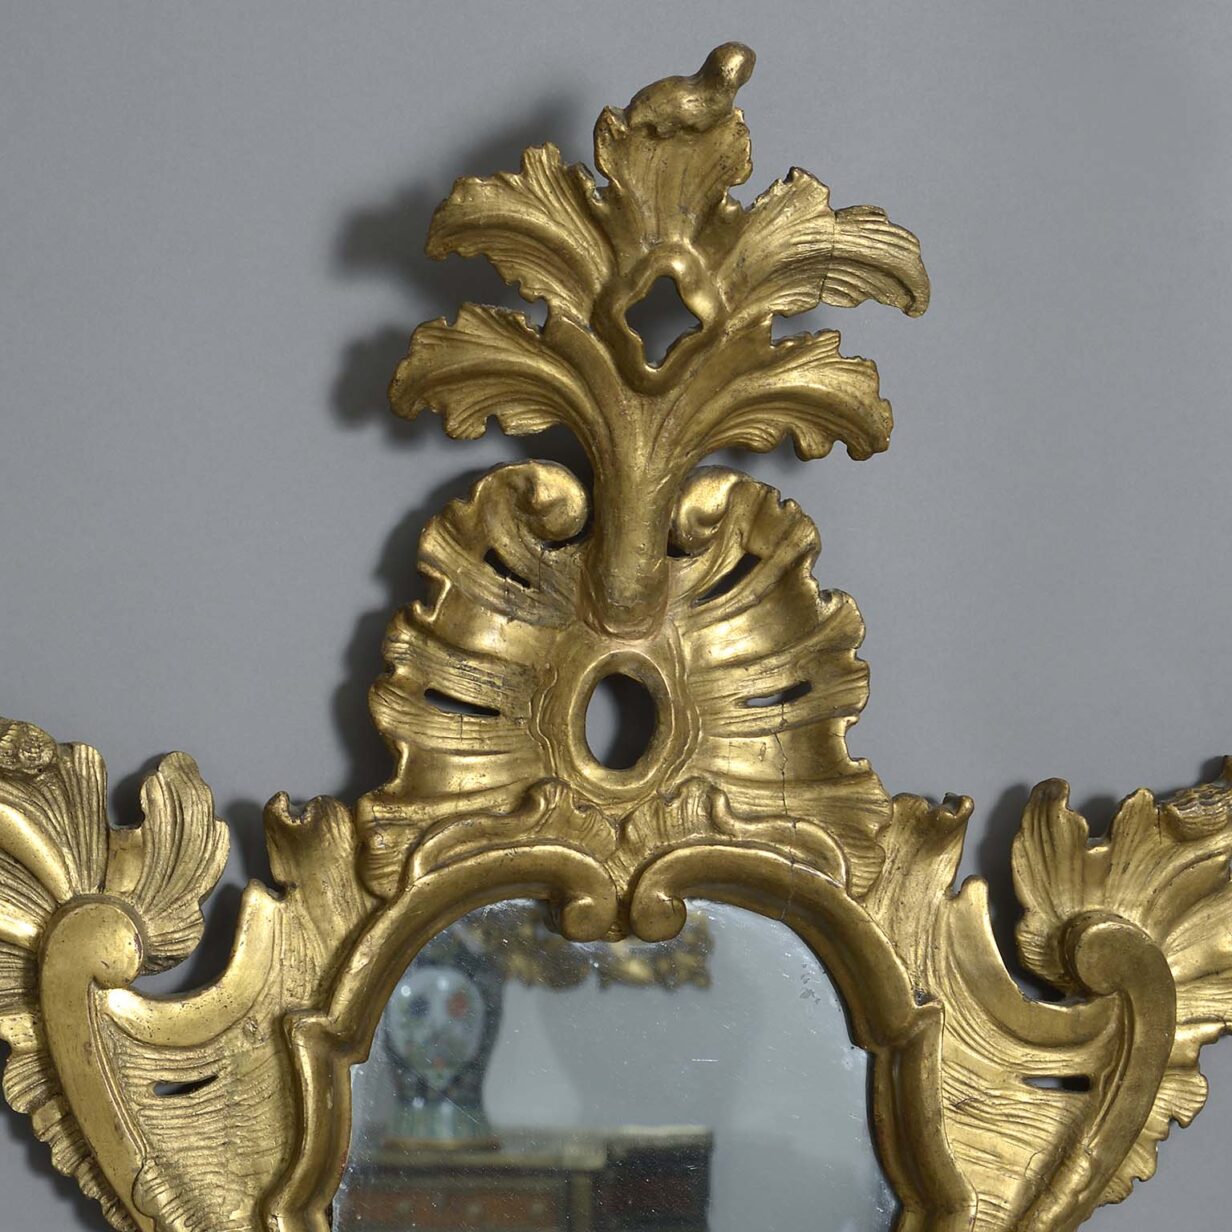 Pair of venetian mirrors